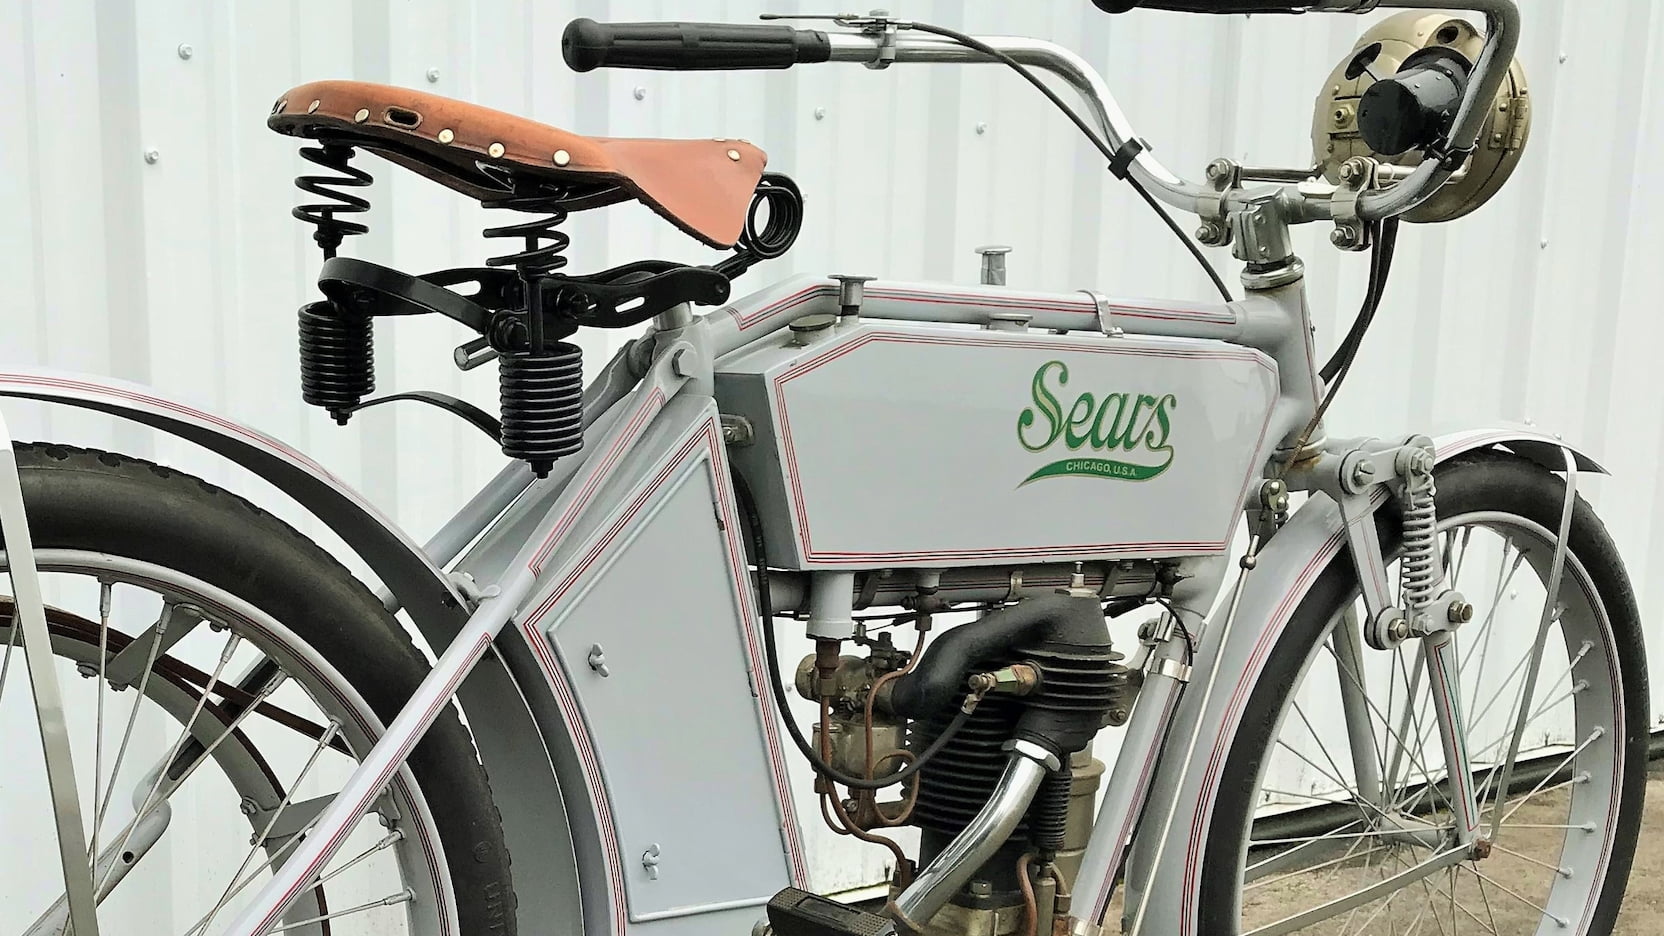 19r202 Sears Auto-Cycle 